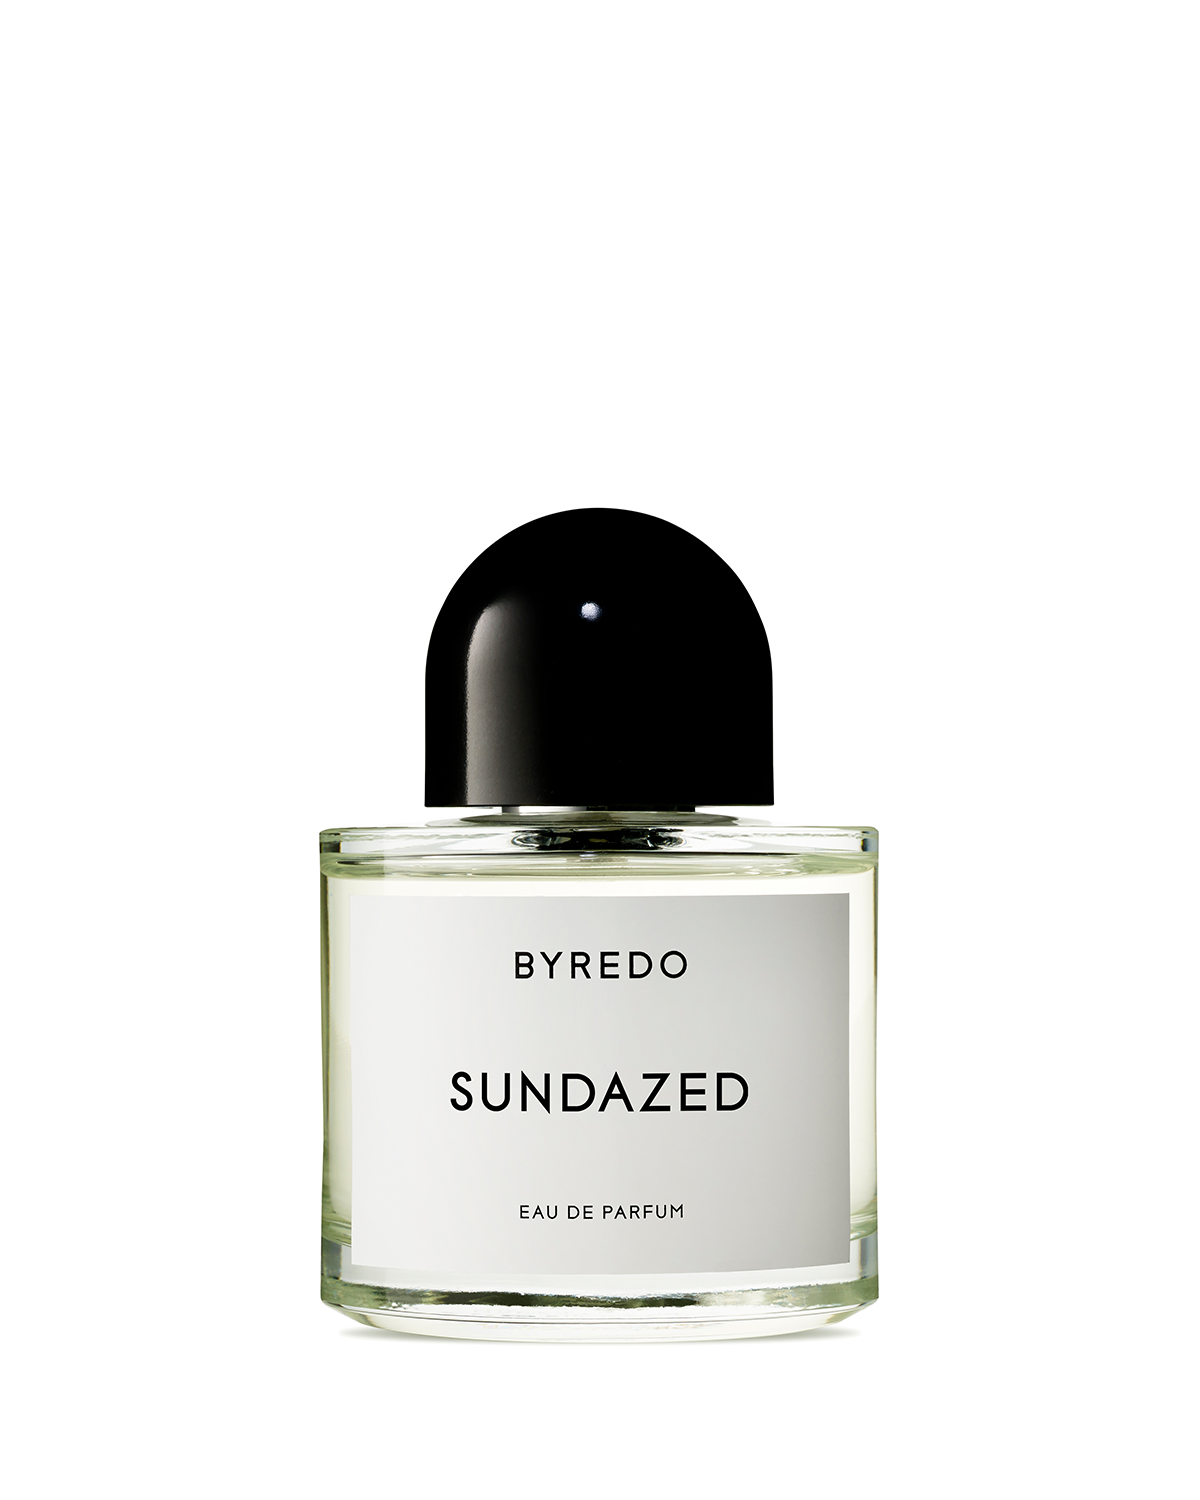 Sundazed 100ml Eau de Parfum